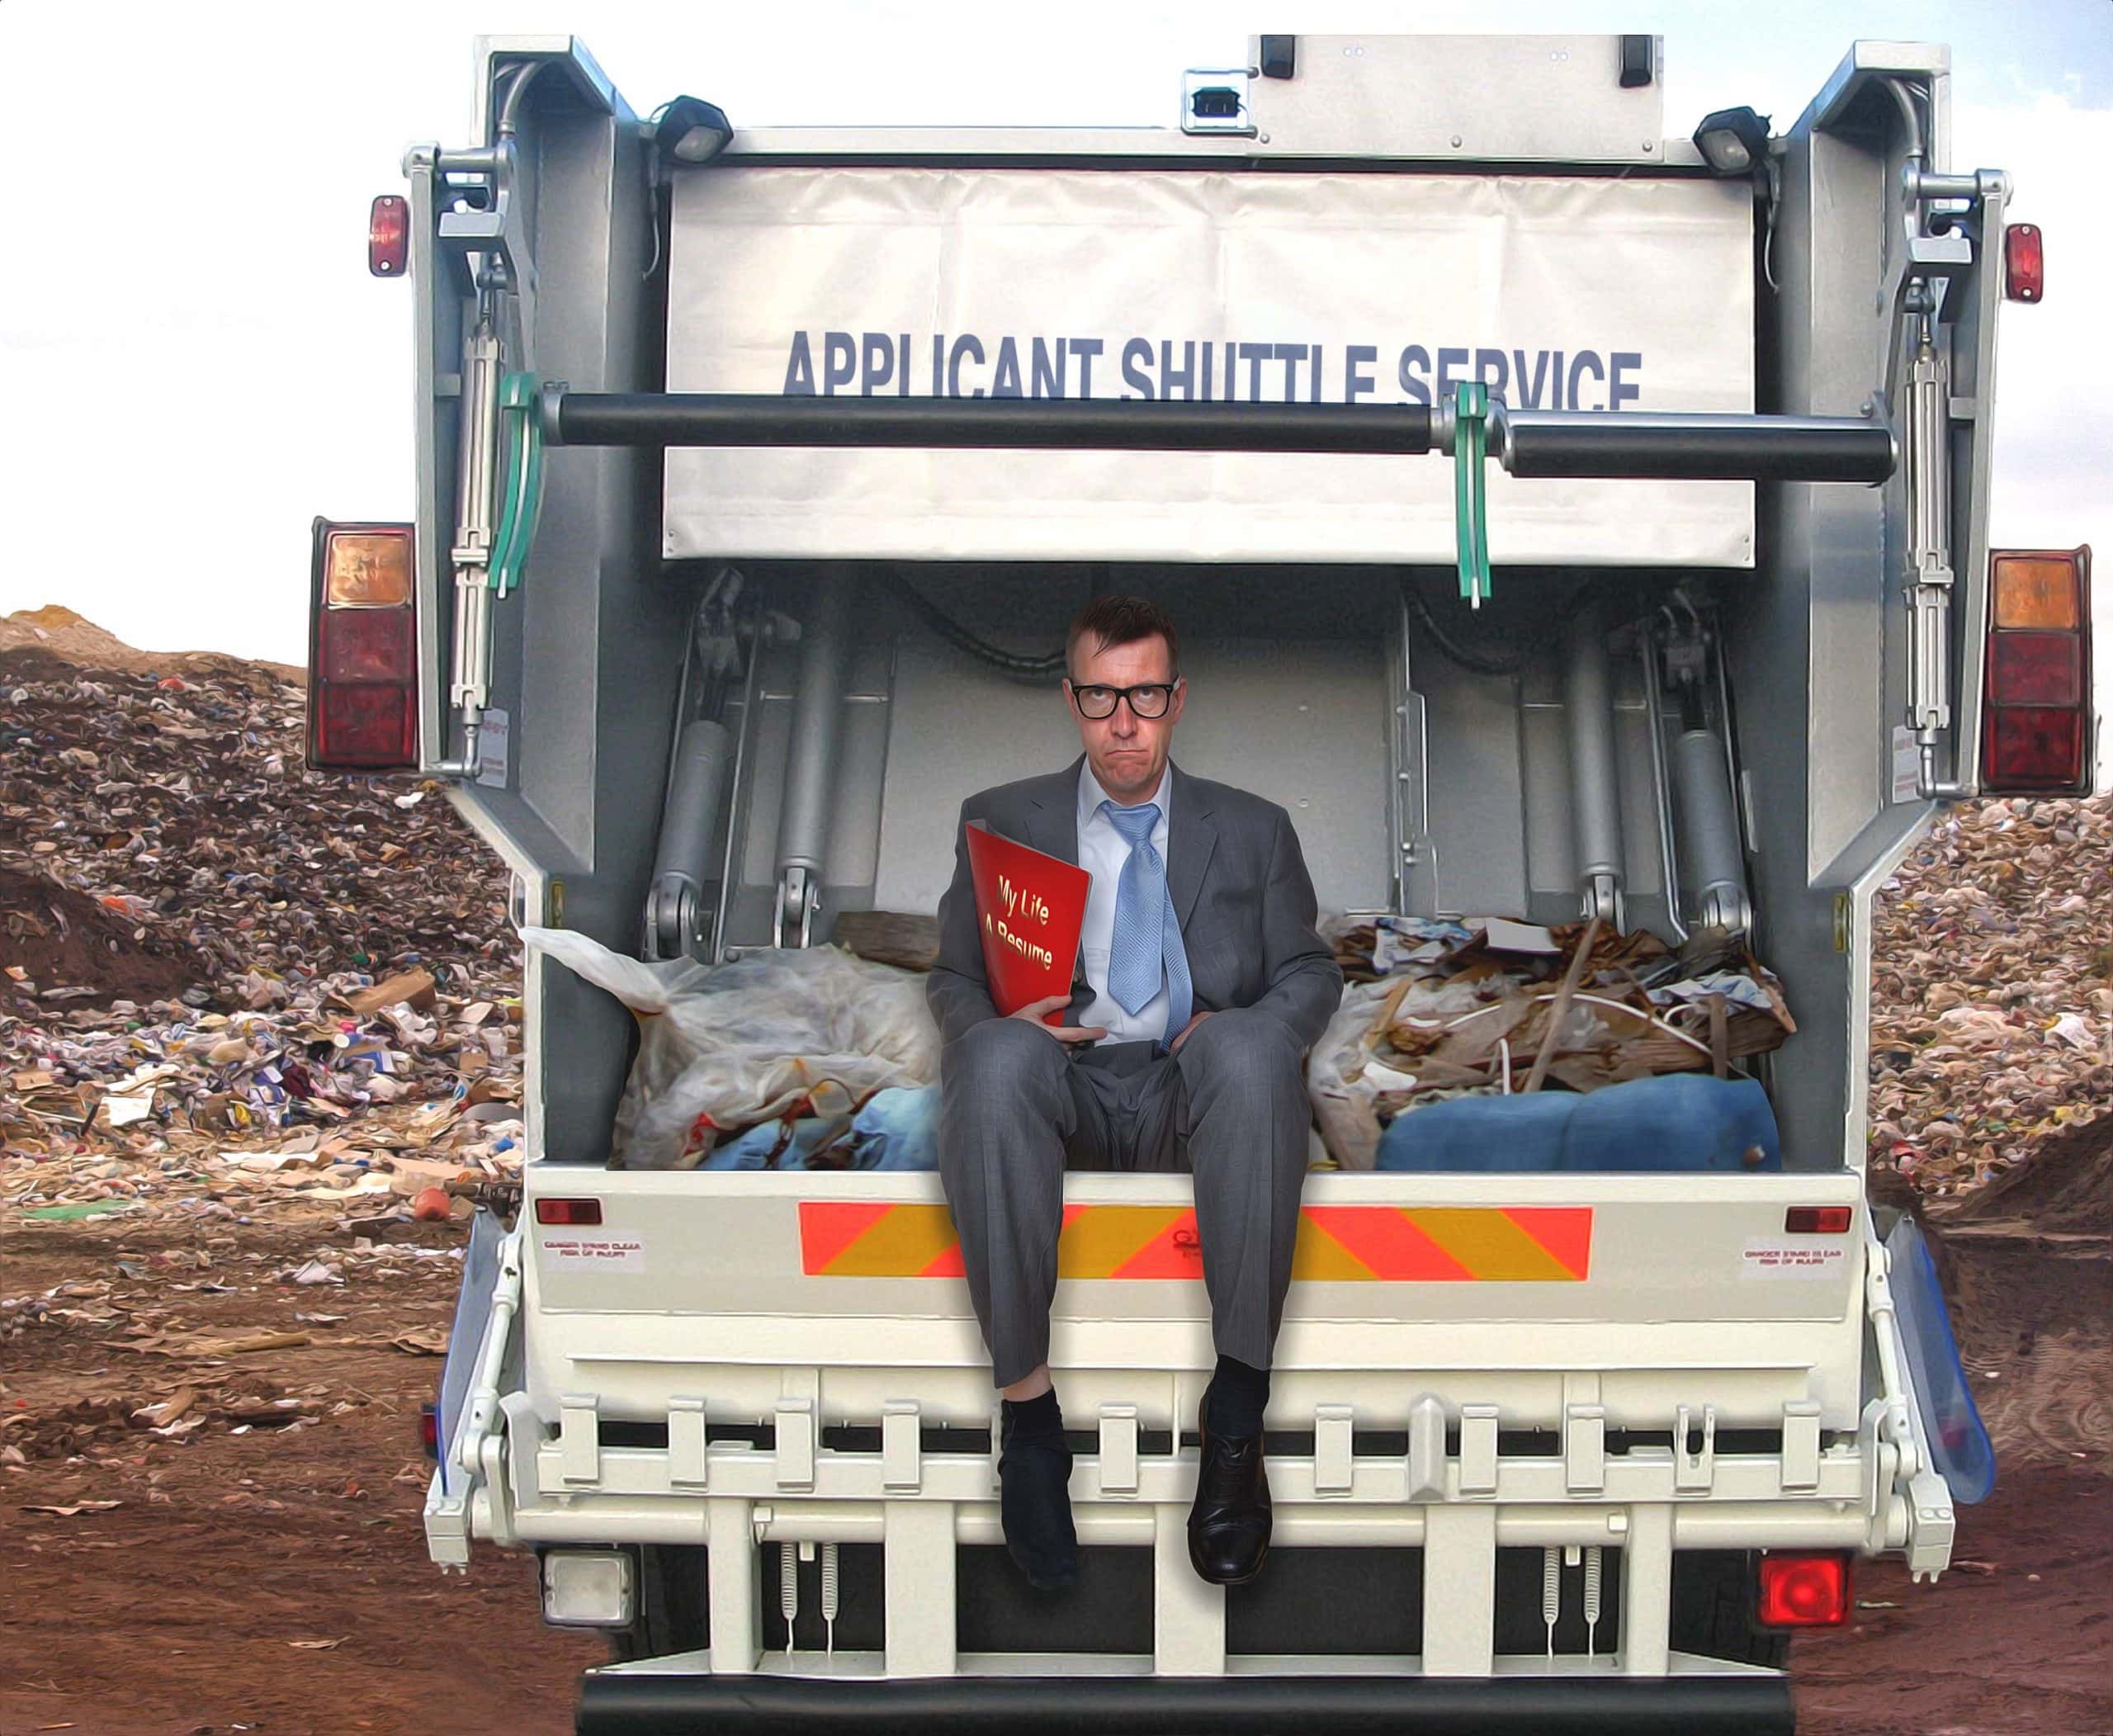 Man sitting in a garbage truck